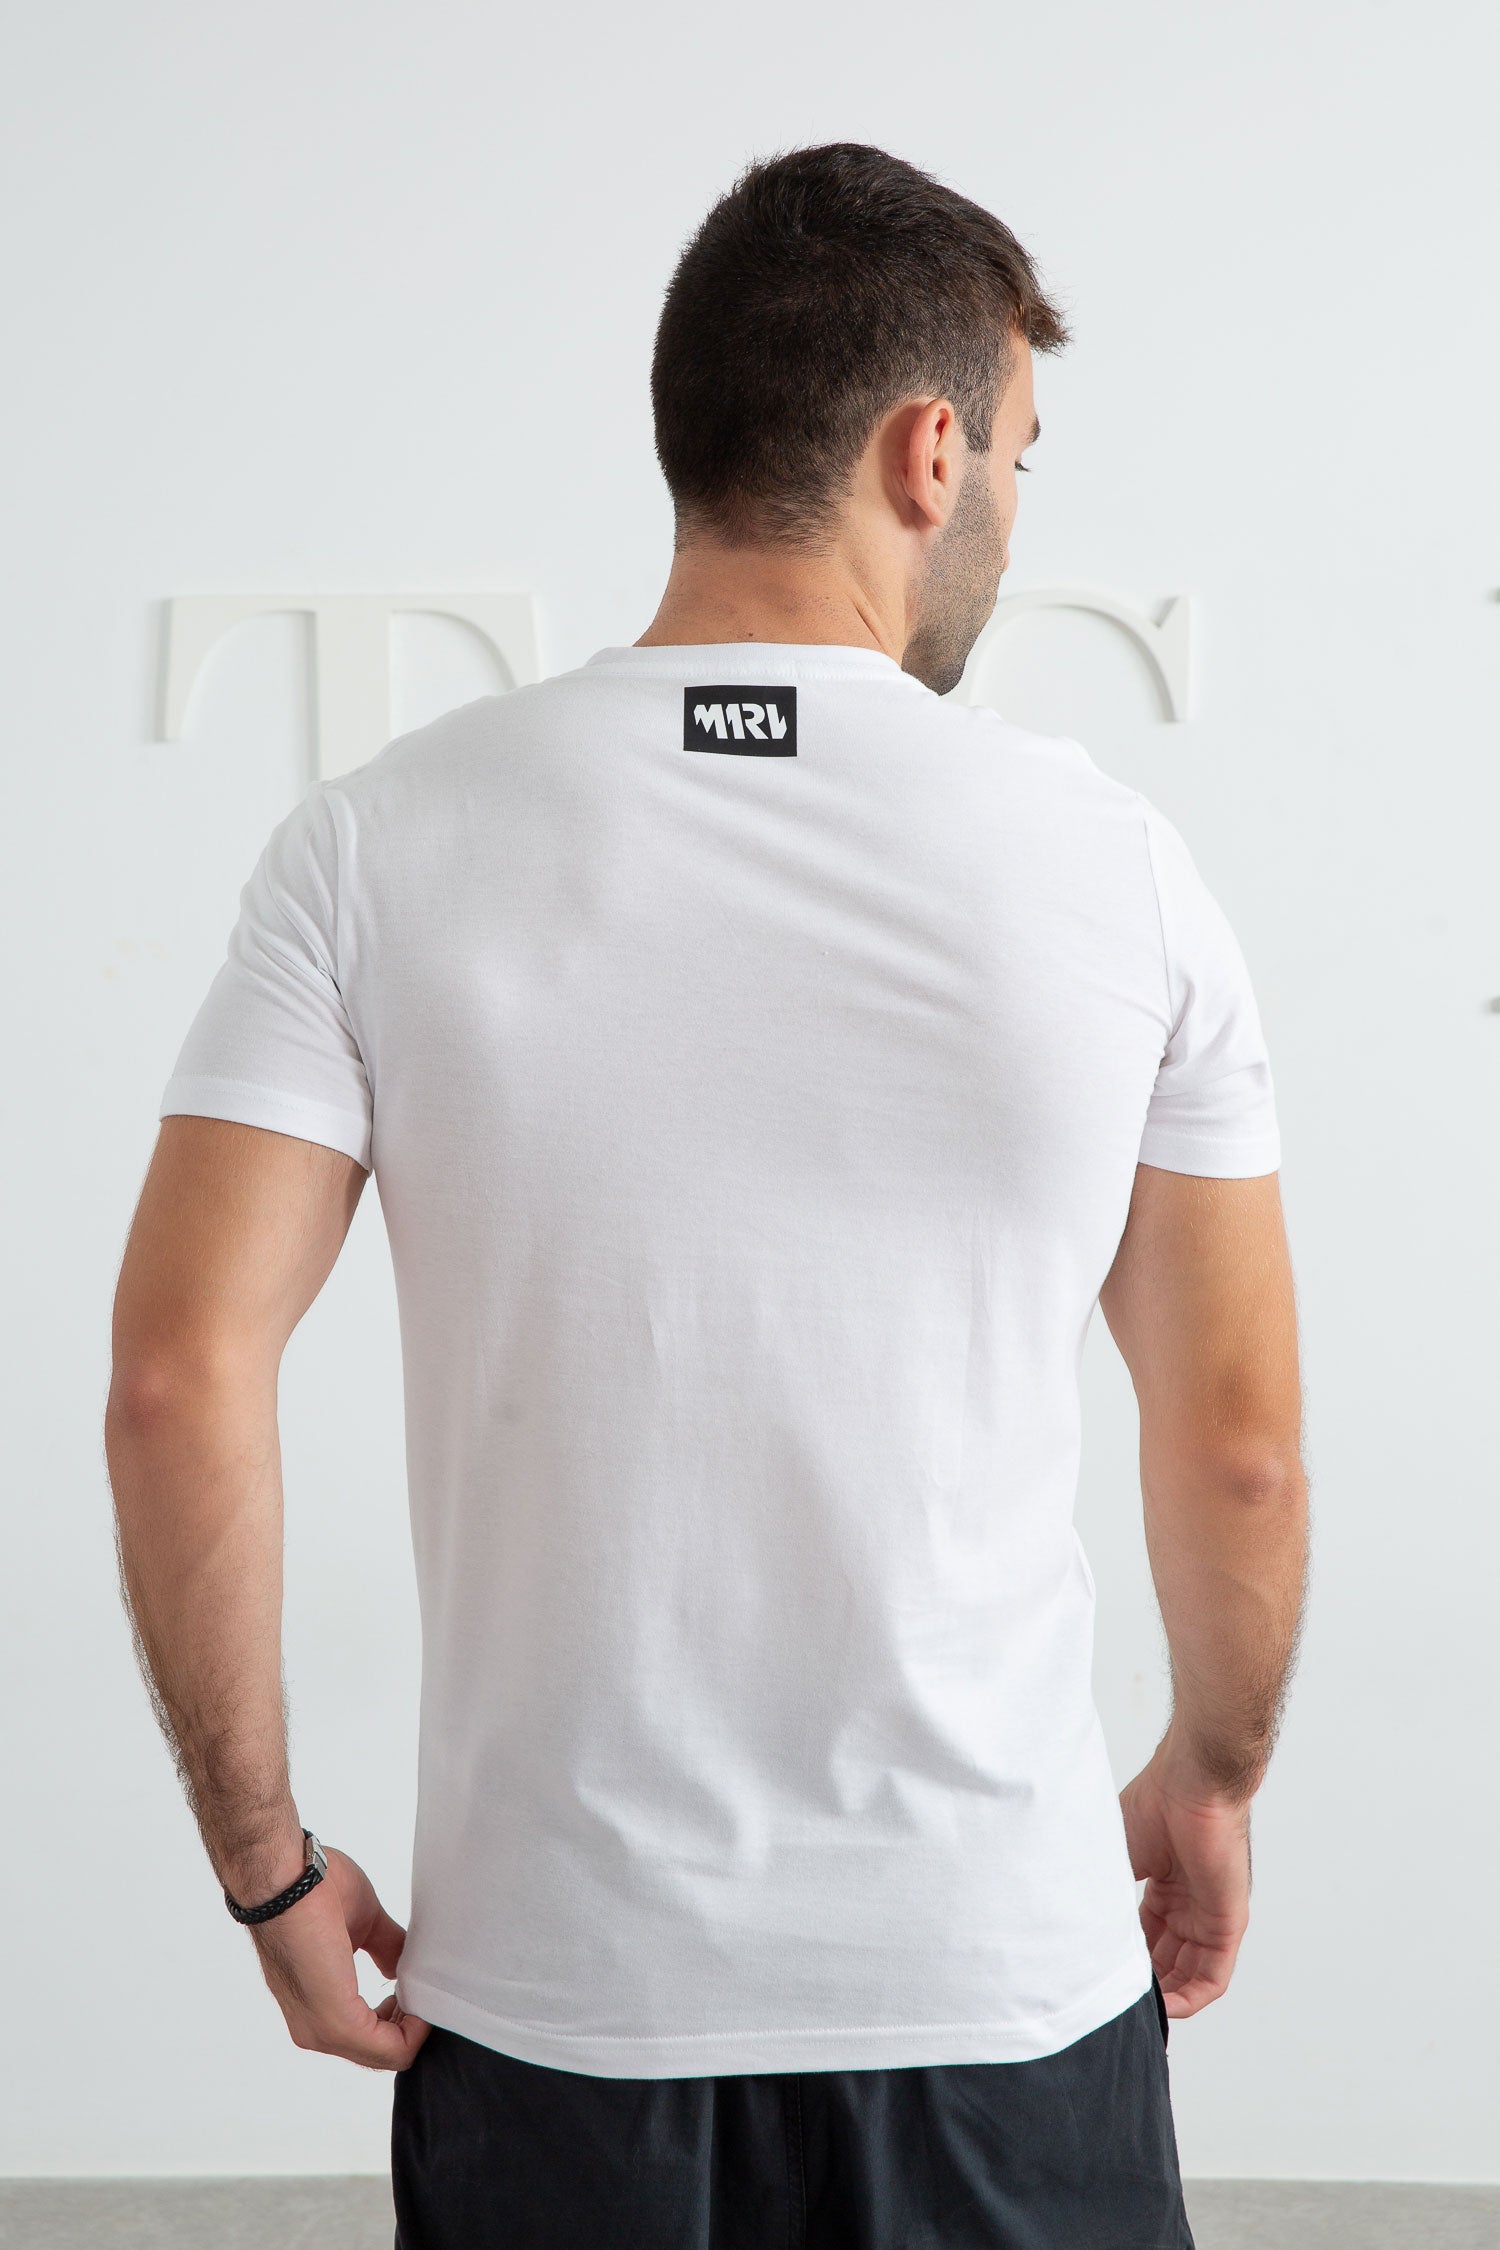 Omar Afendi Unisex T-shirt - Marv